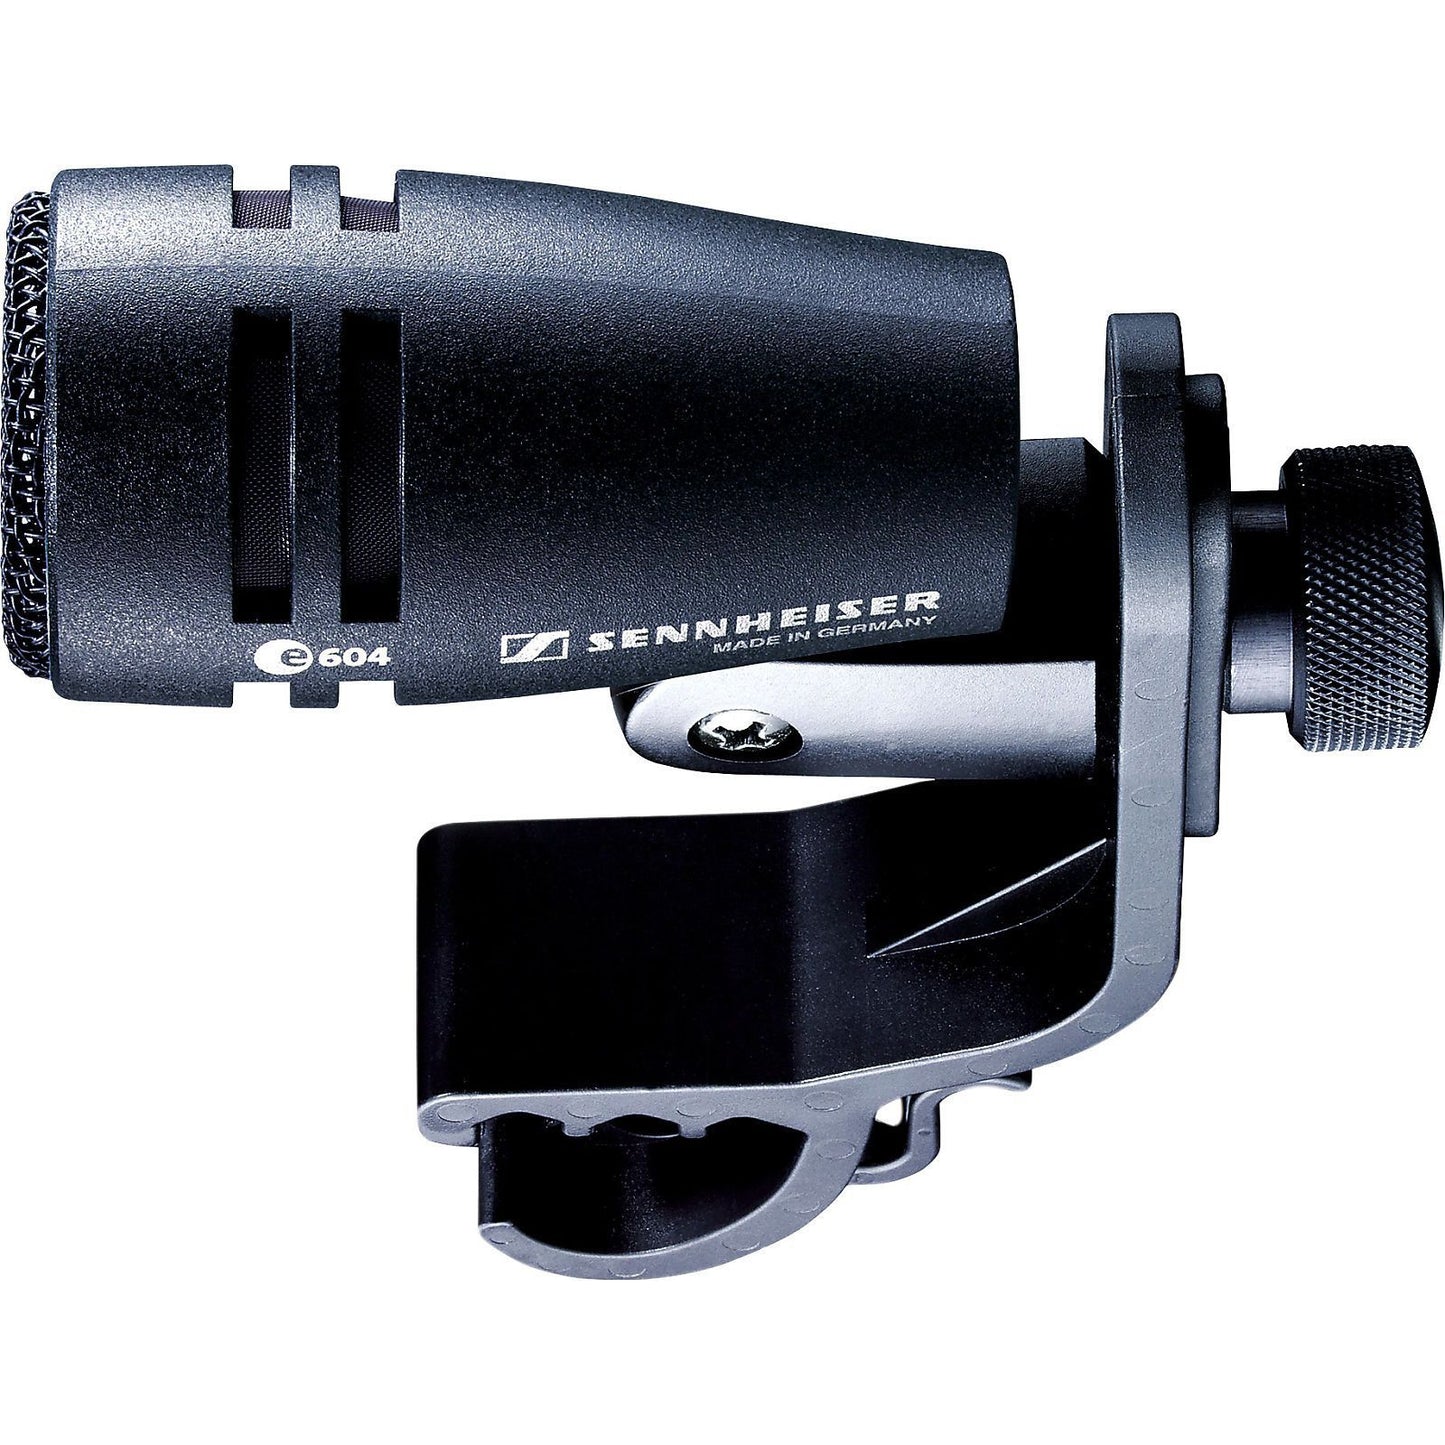 Sennheiser e604 Evolution Dynamic Cardioid Rack Tom and Snare Microphone, Single Microphone